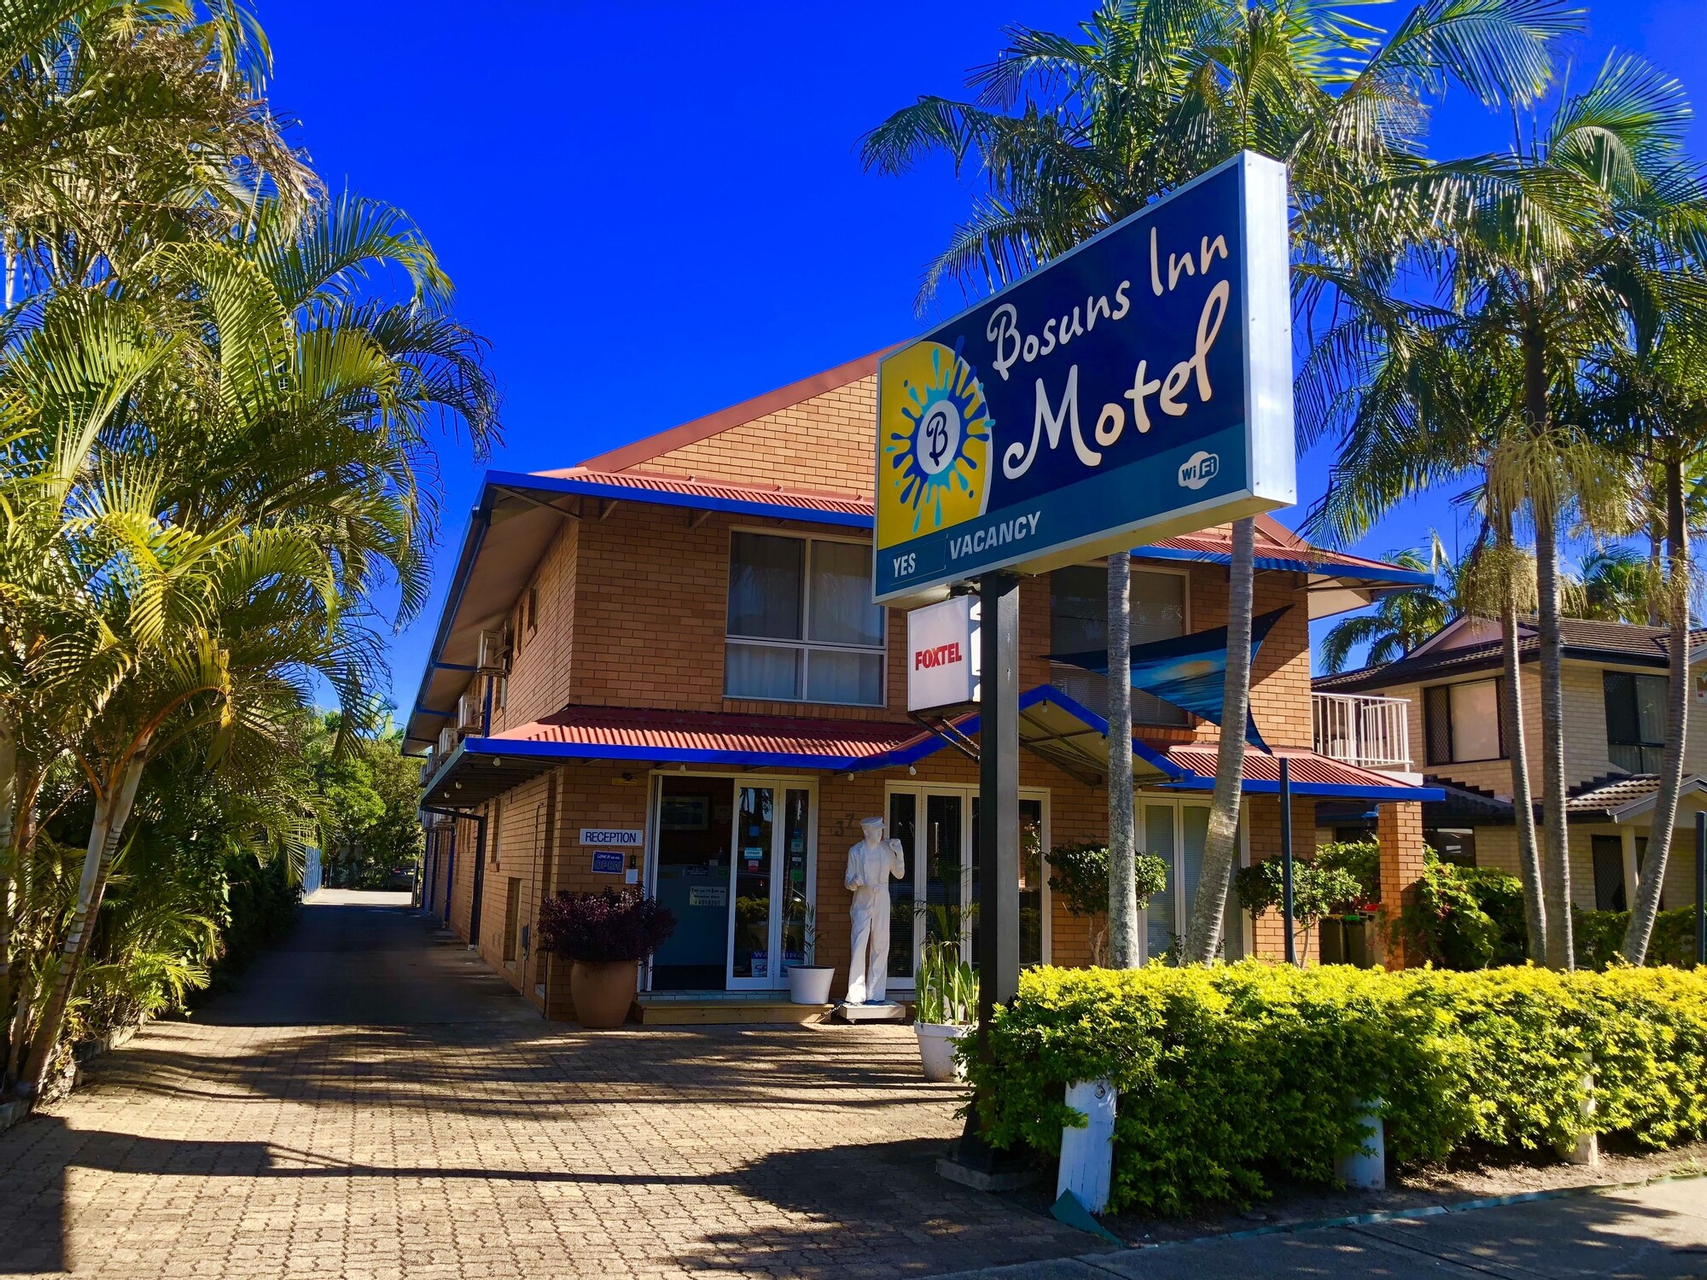 Bosuns Inn Motel, Coffs Harbour - Pt A